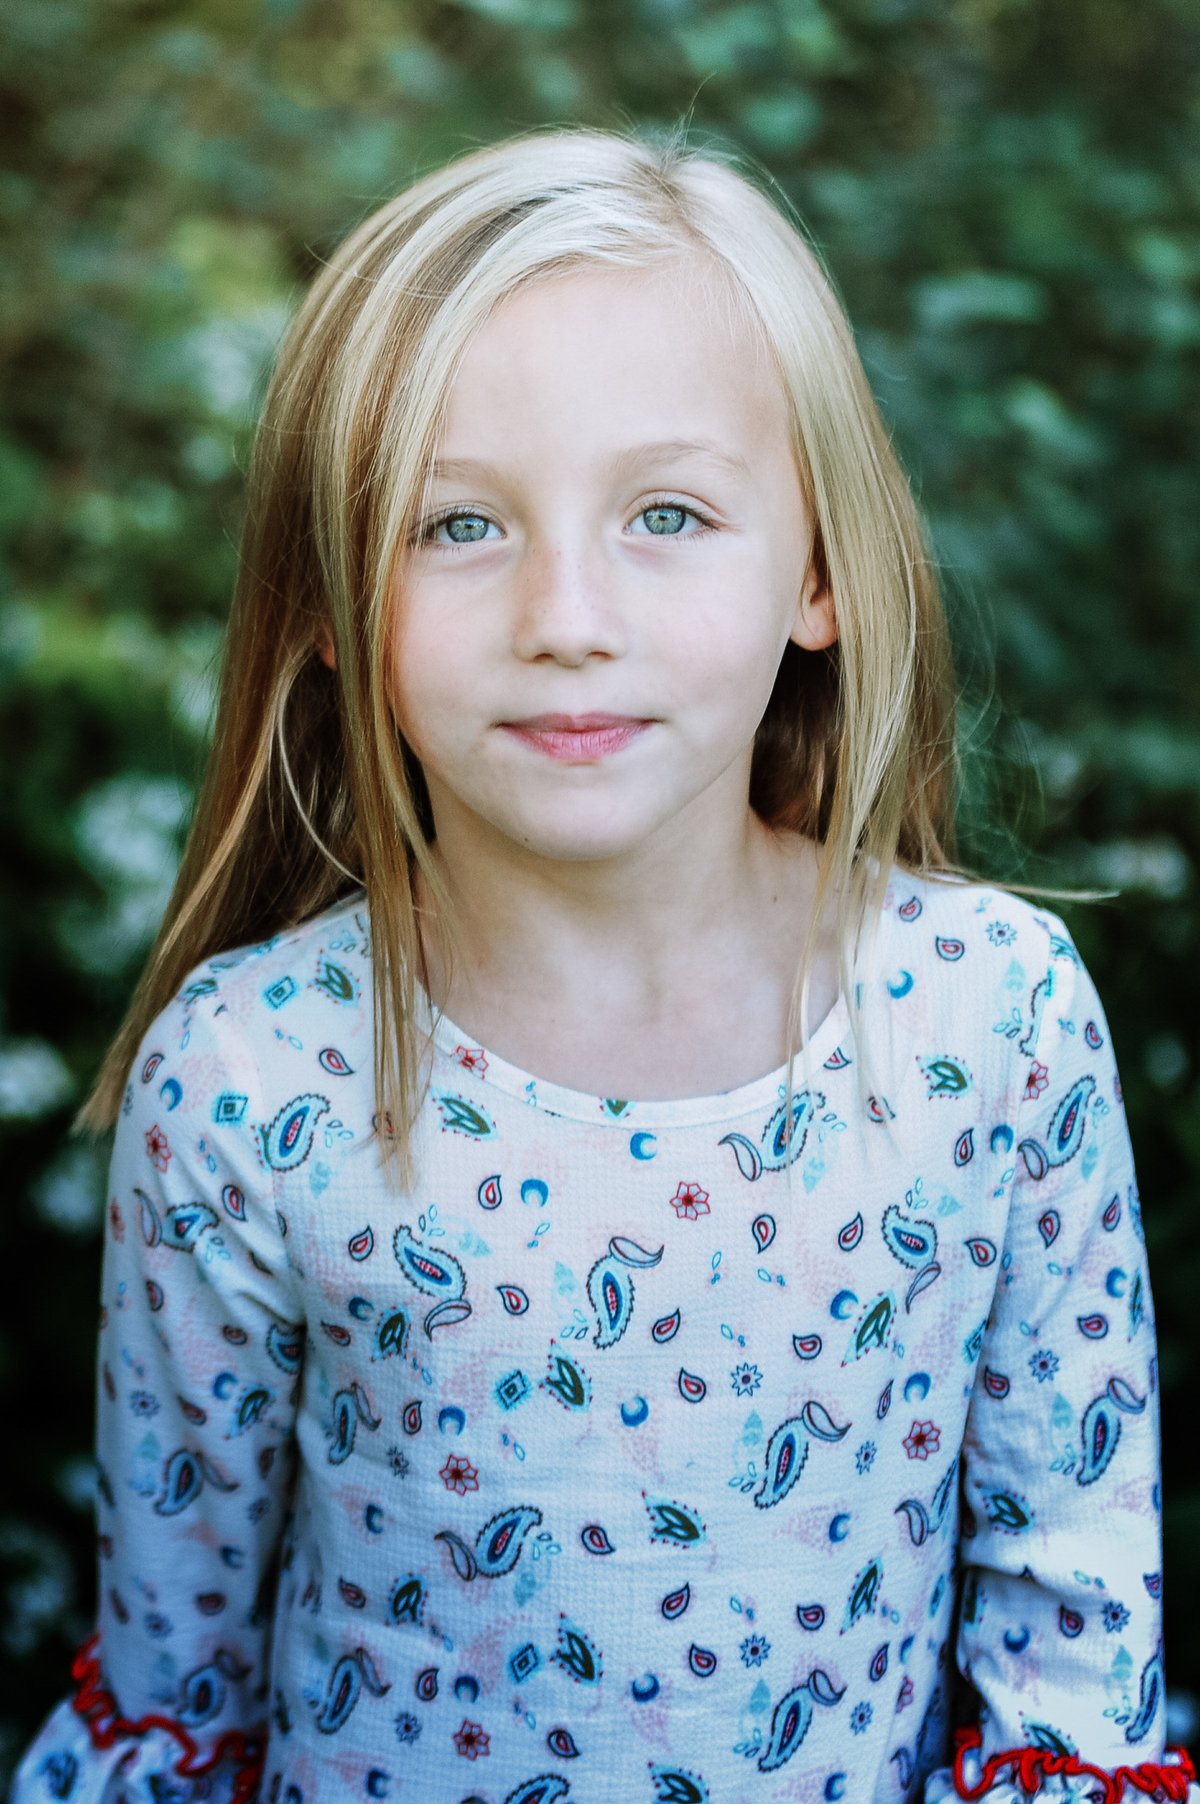 Child Photography blonde hair blue eyed girl